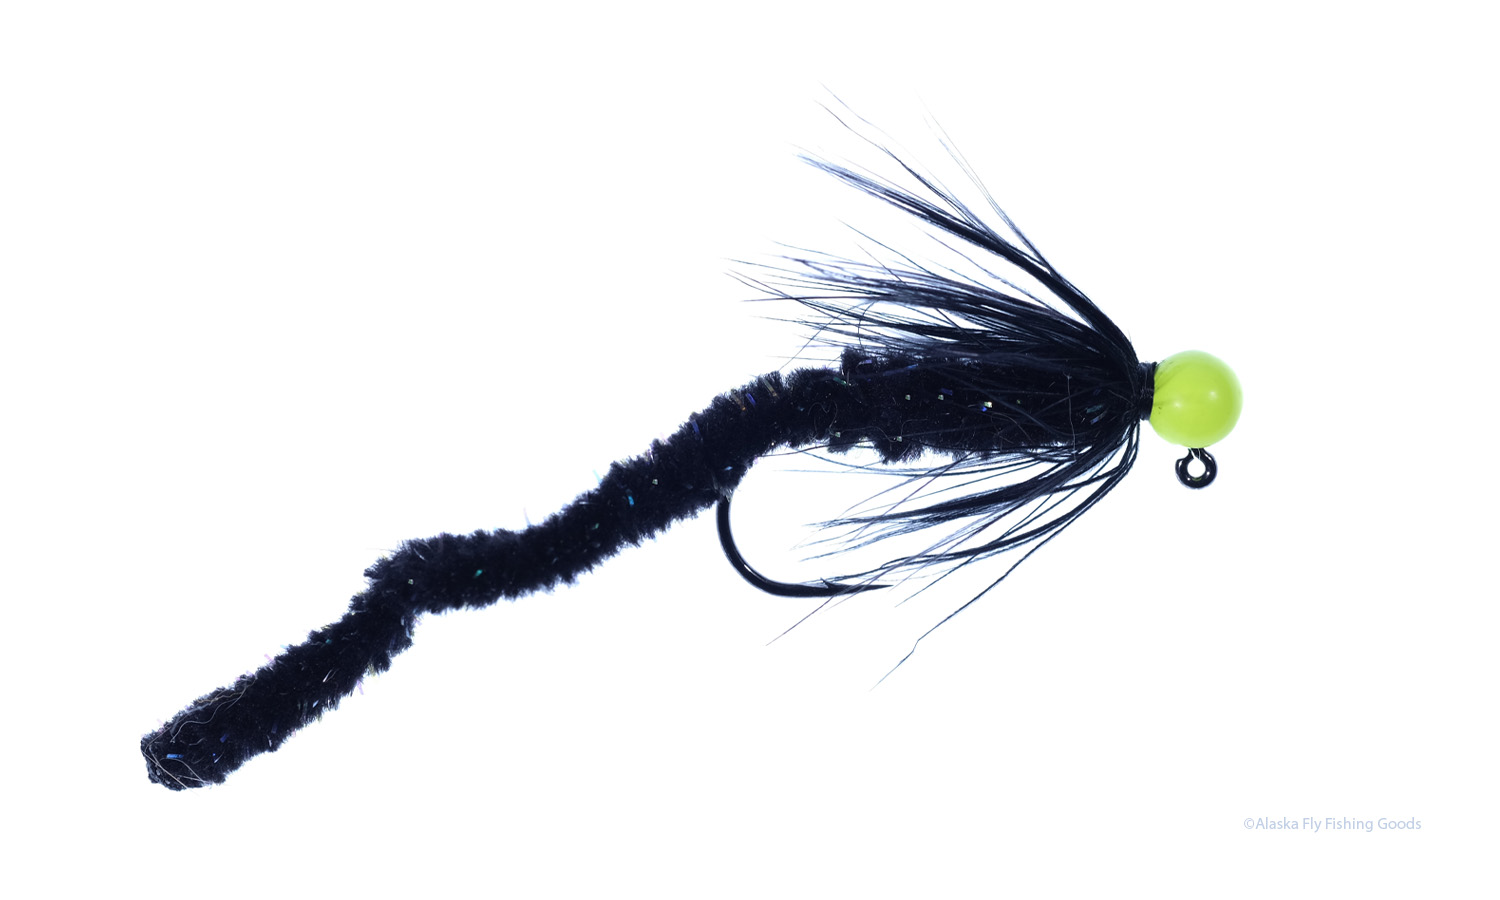 https://www.alaskaflyfishinggoods.com/wp-content/uploads/Galaxy-Worm-Black-Chartreuse.jpg